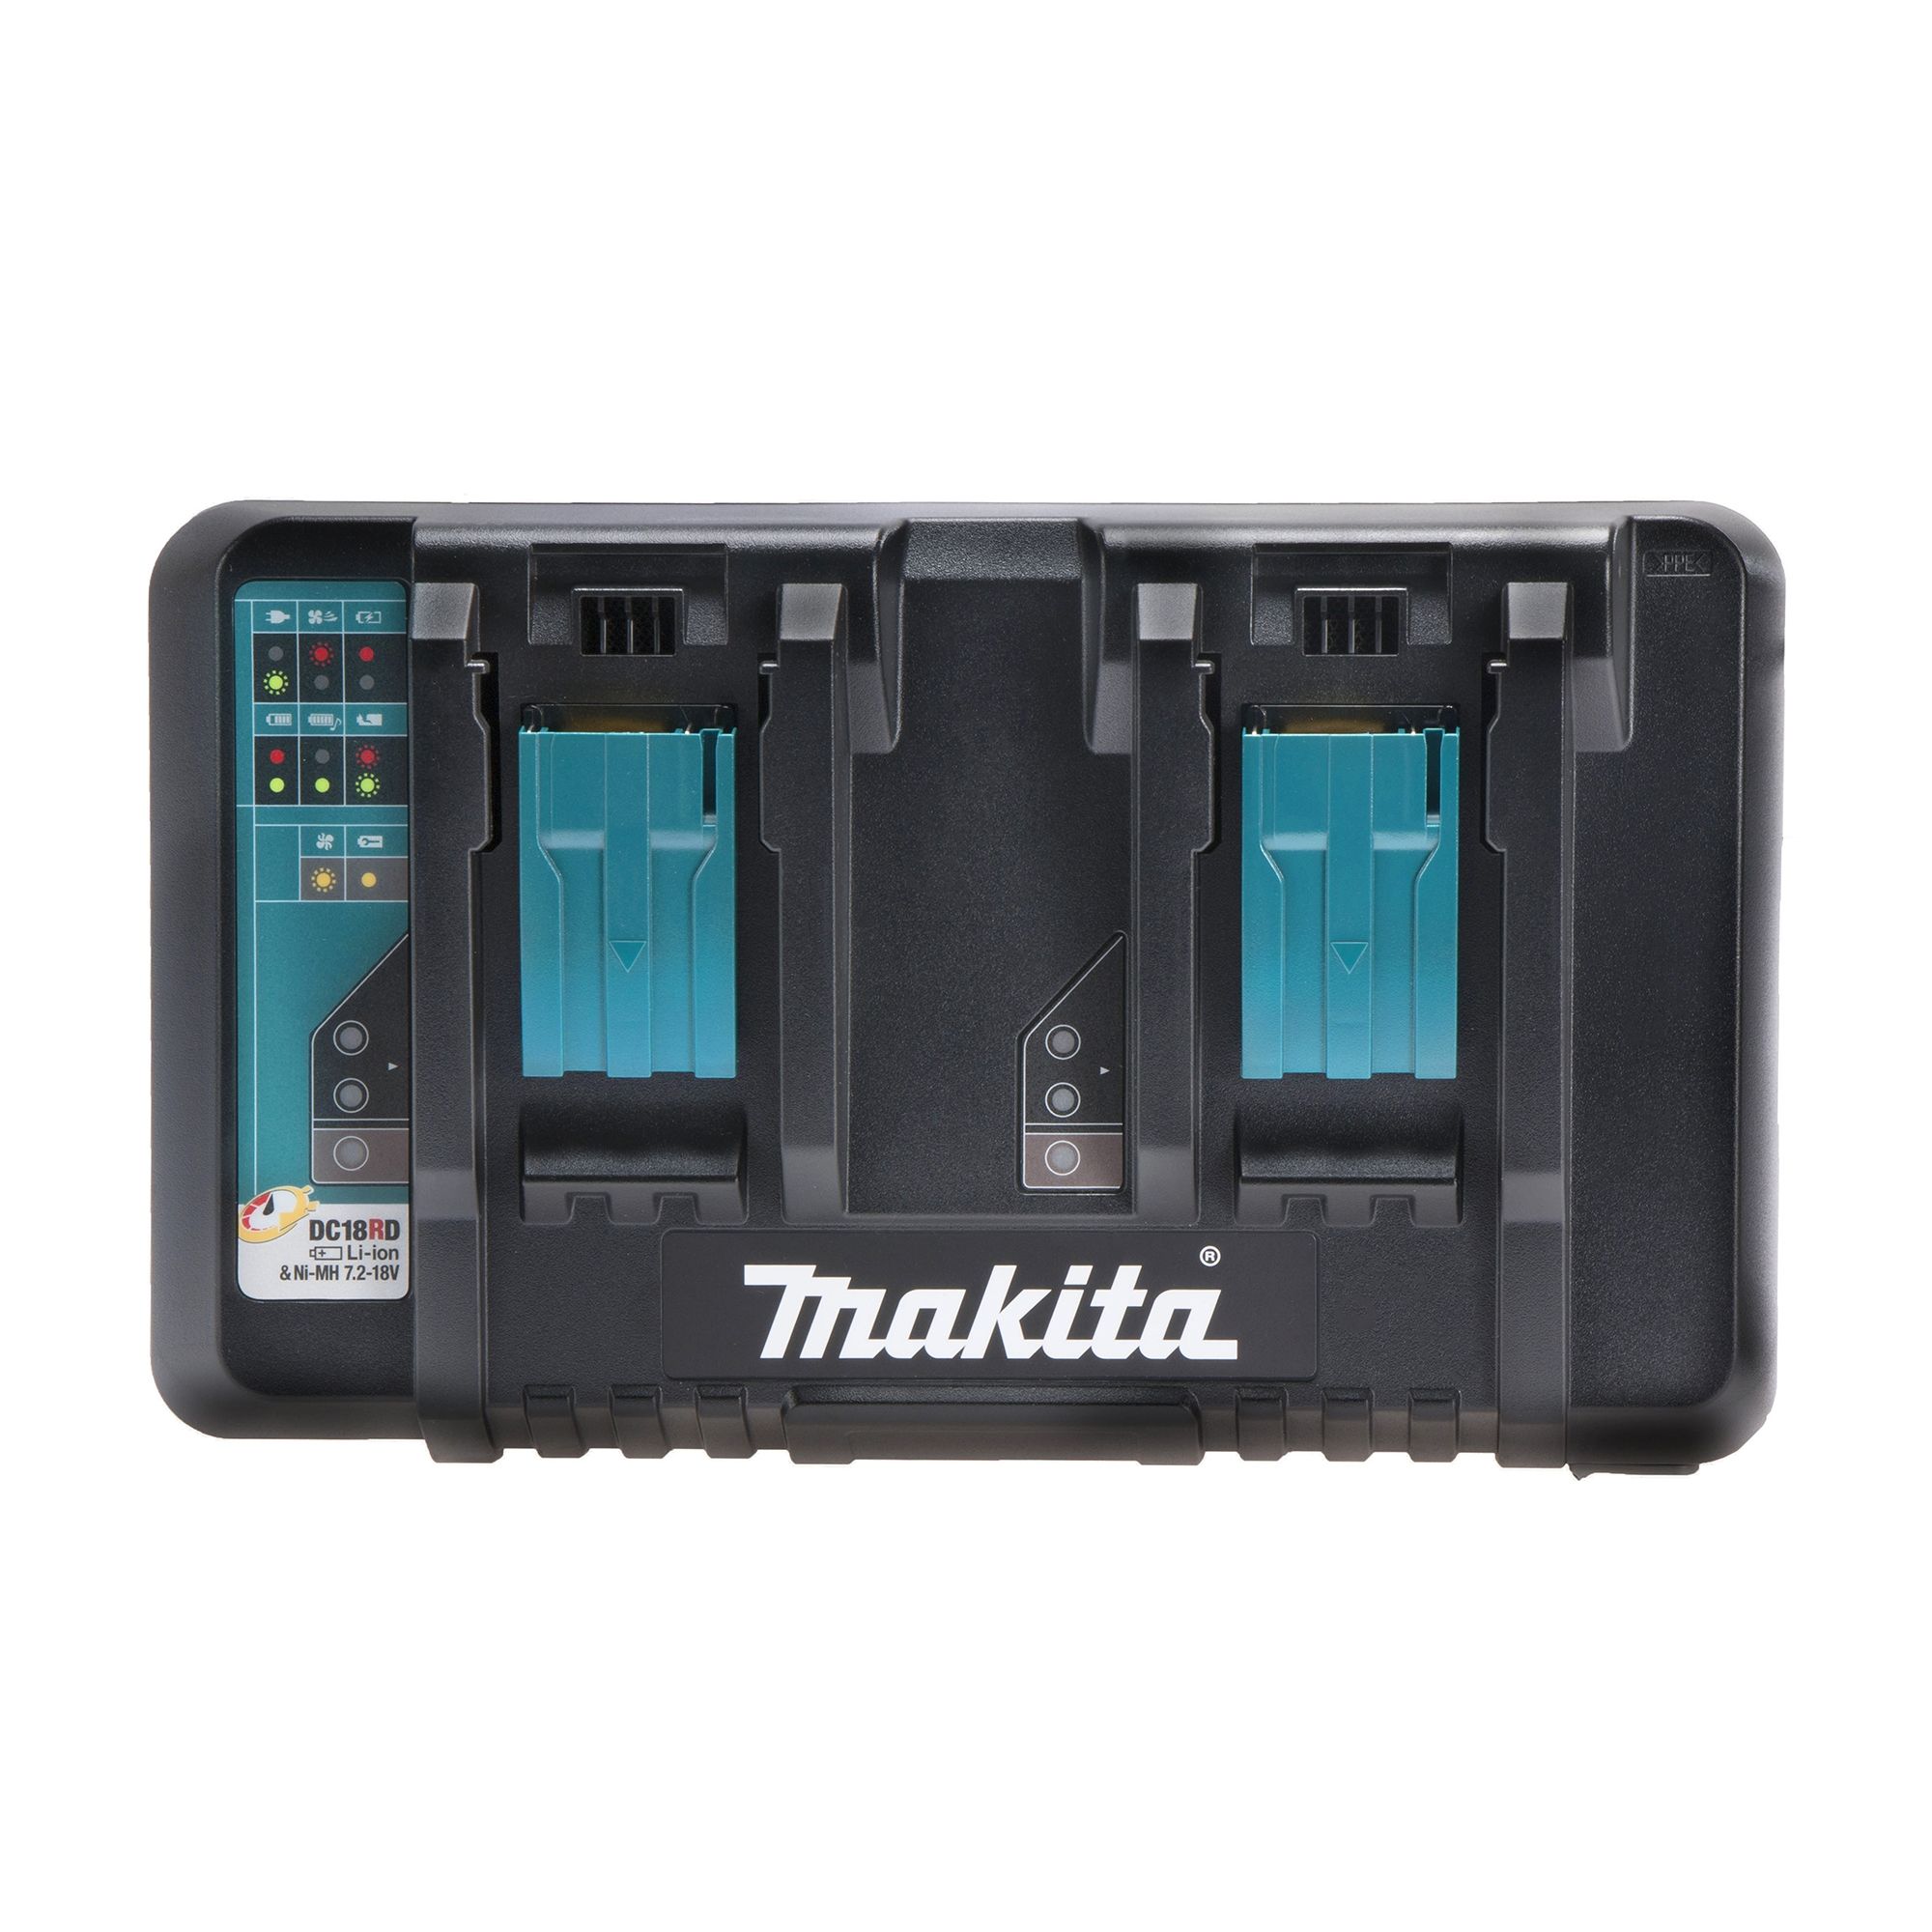 For Makita DC18RD 7.2V-18V Li-ion Dual Port Rapid Battery Charger LXT UK Plug 